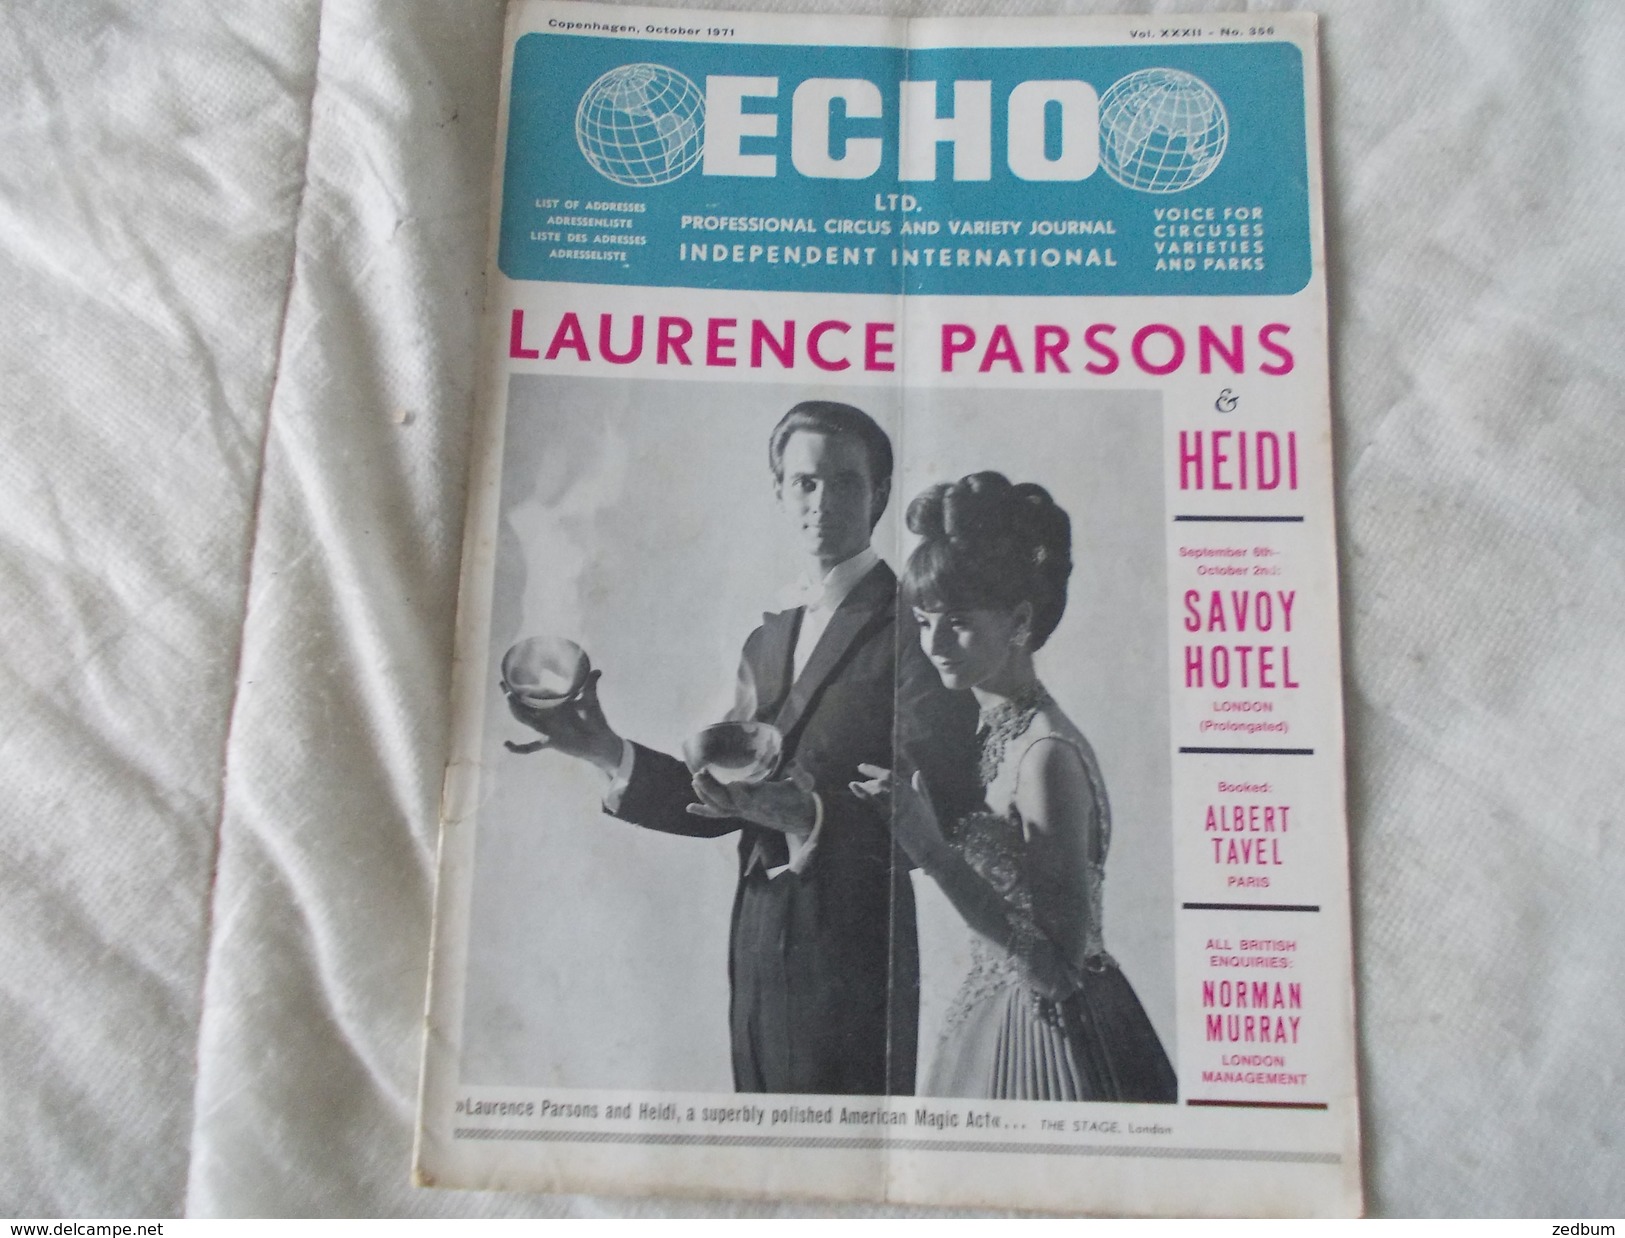 ECHO LTD Professional Circus And Variety Journal Independent International N° 356 October 1971 - Divertissement